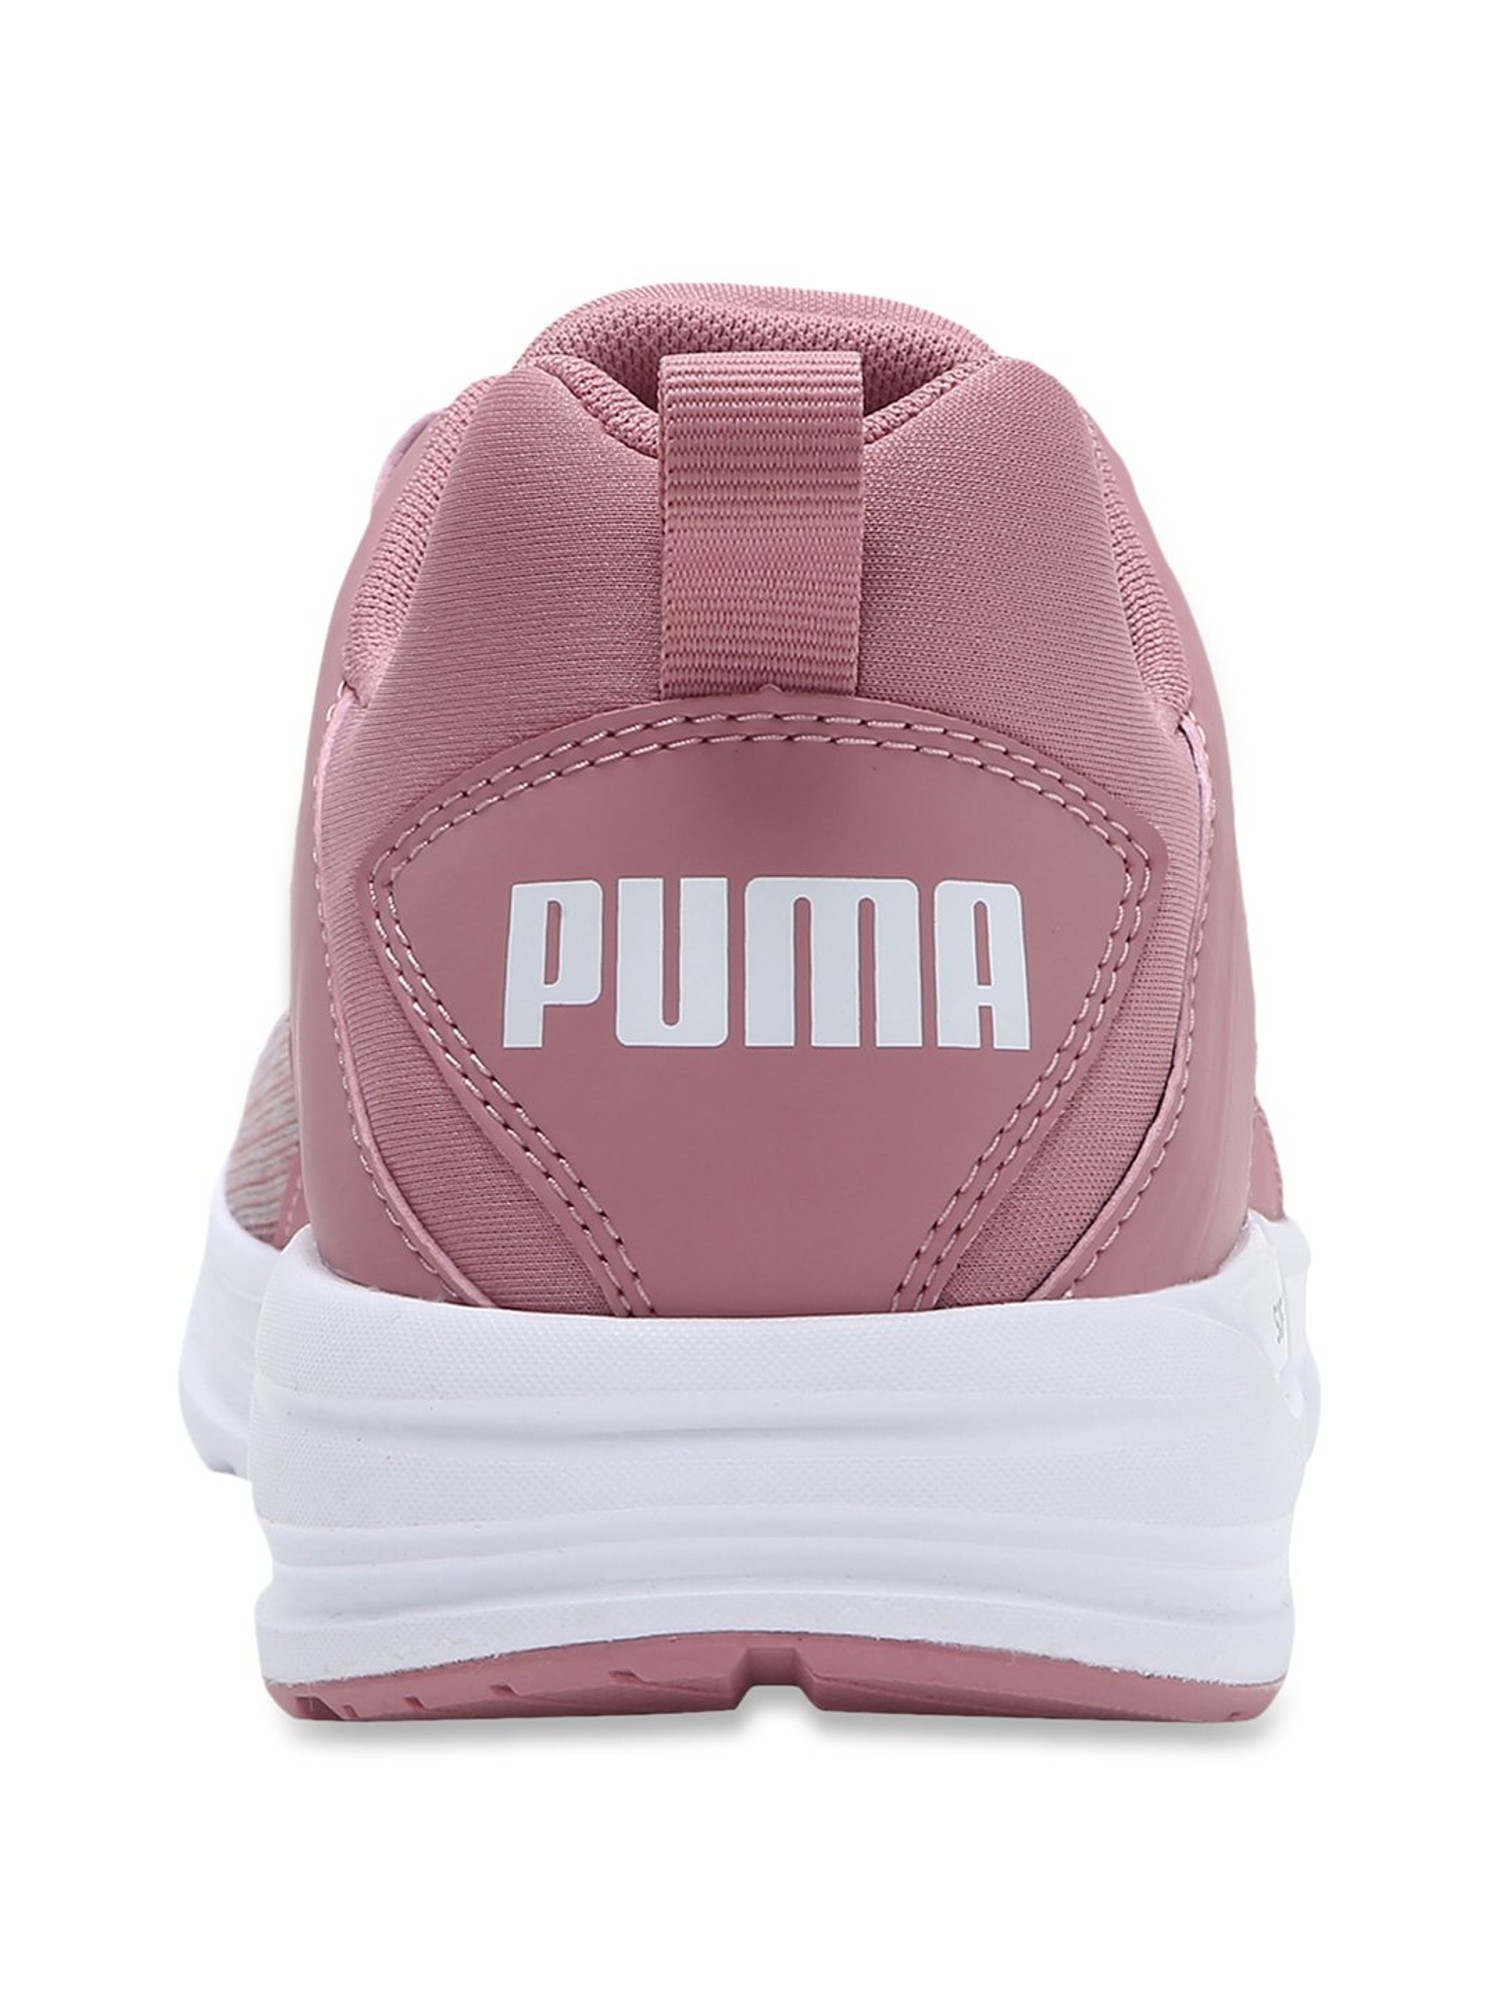 Buy Alt Running Price for at Best Puma 2 CLiQ Shoes Tata Pink Men @ Comet